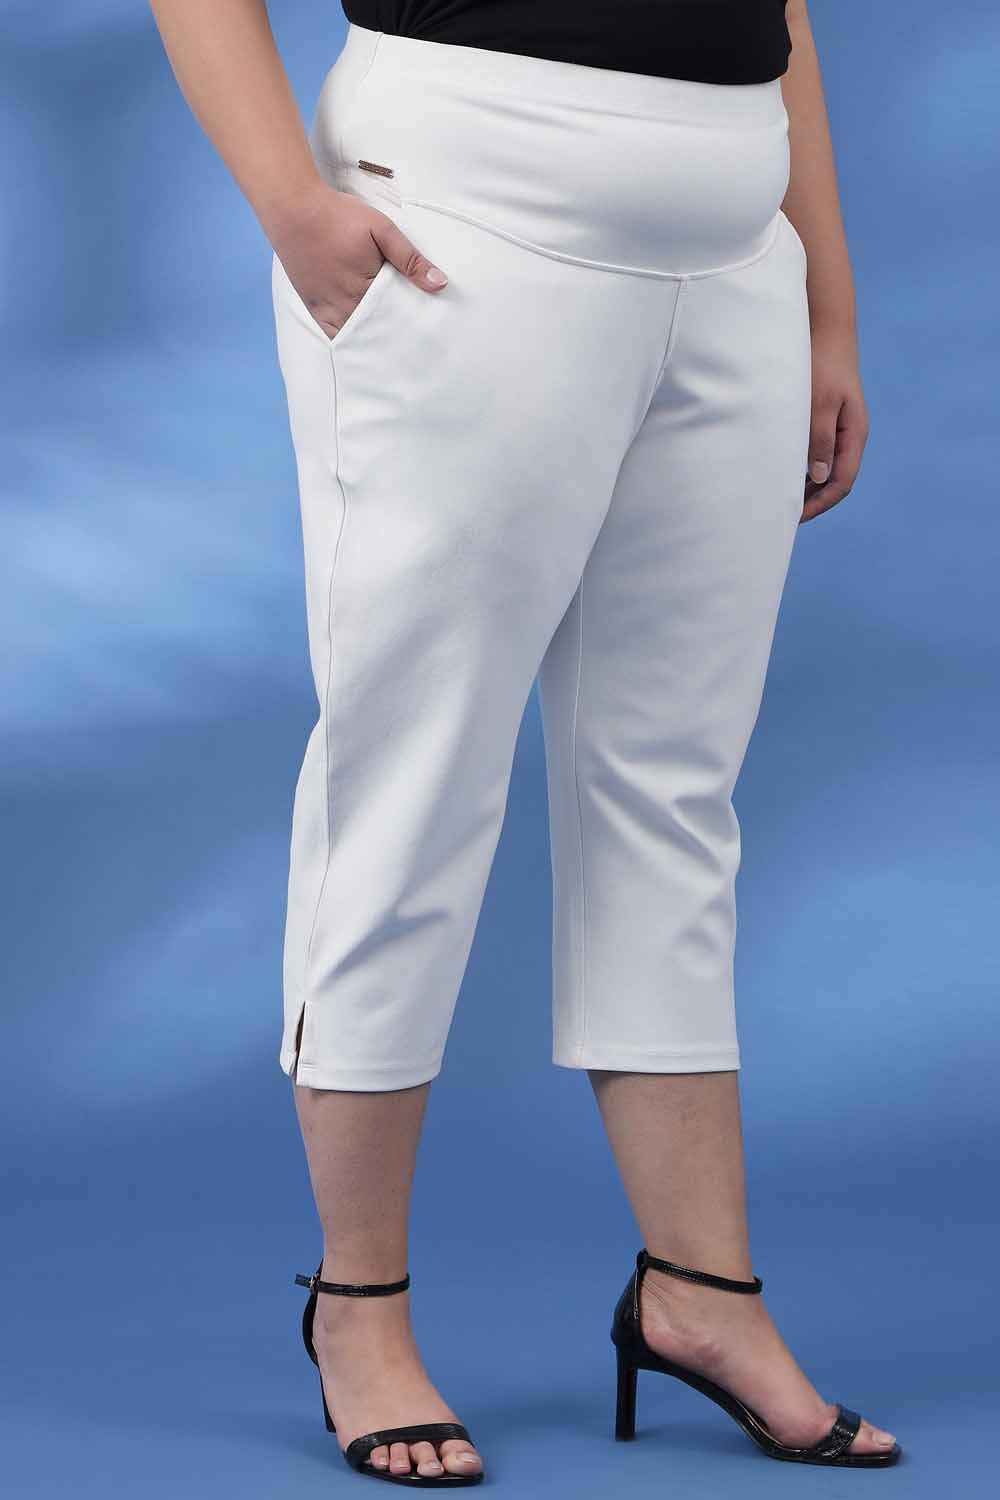 Mixpiju Pants for Women Casual Plus Size Summer, Capri Pants for